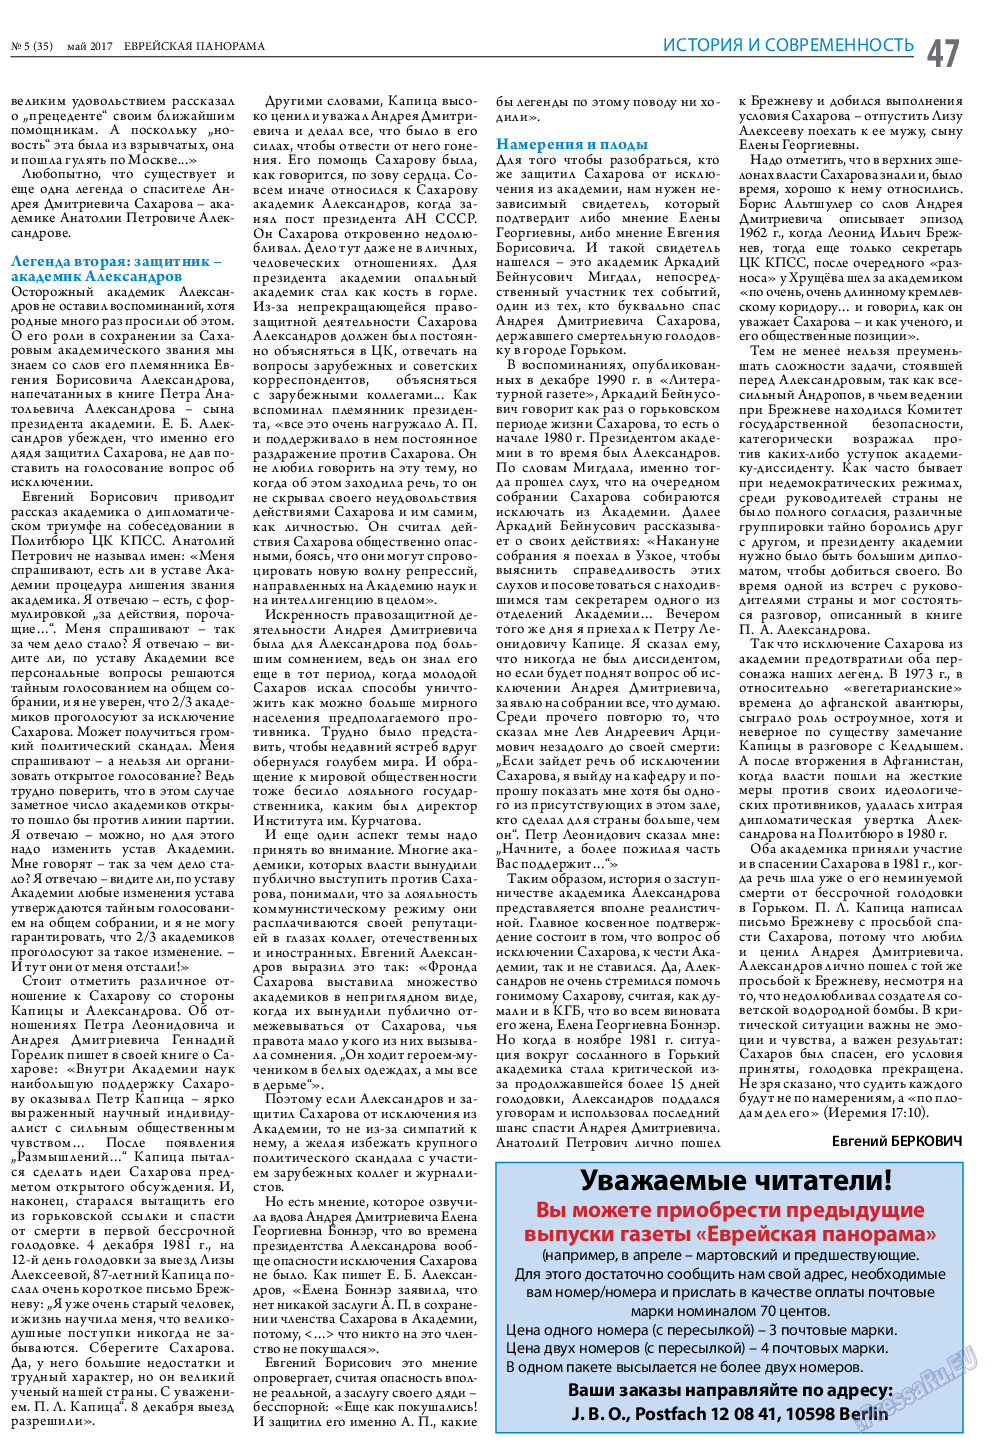 Еврейская панорама, газета. 2017 №5 стр.47